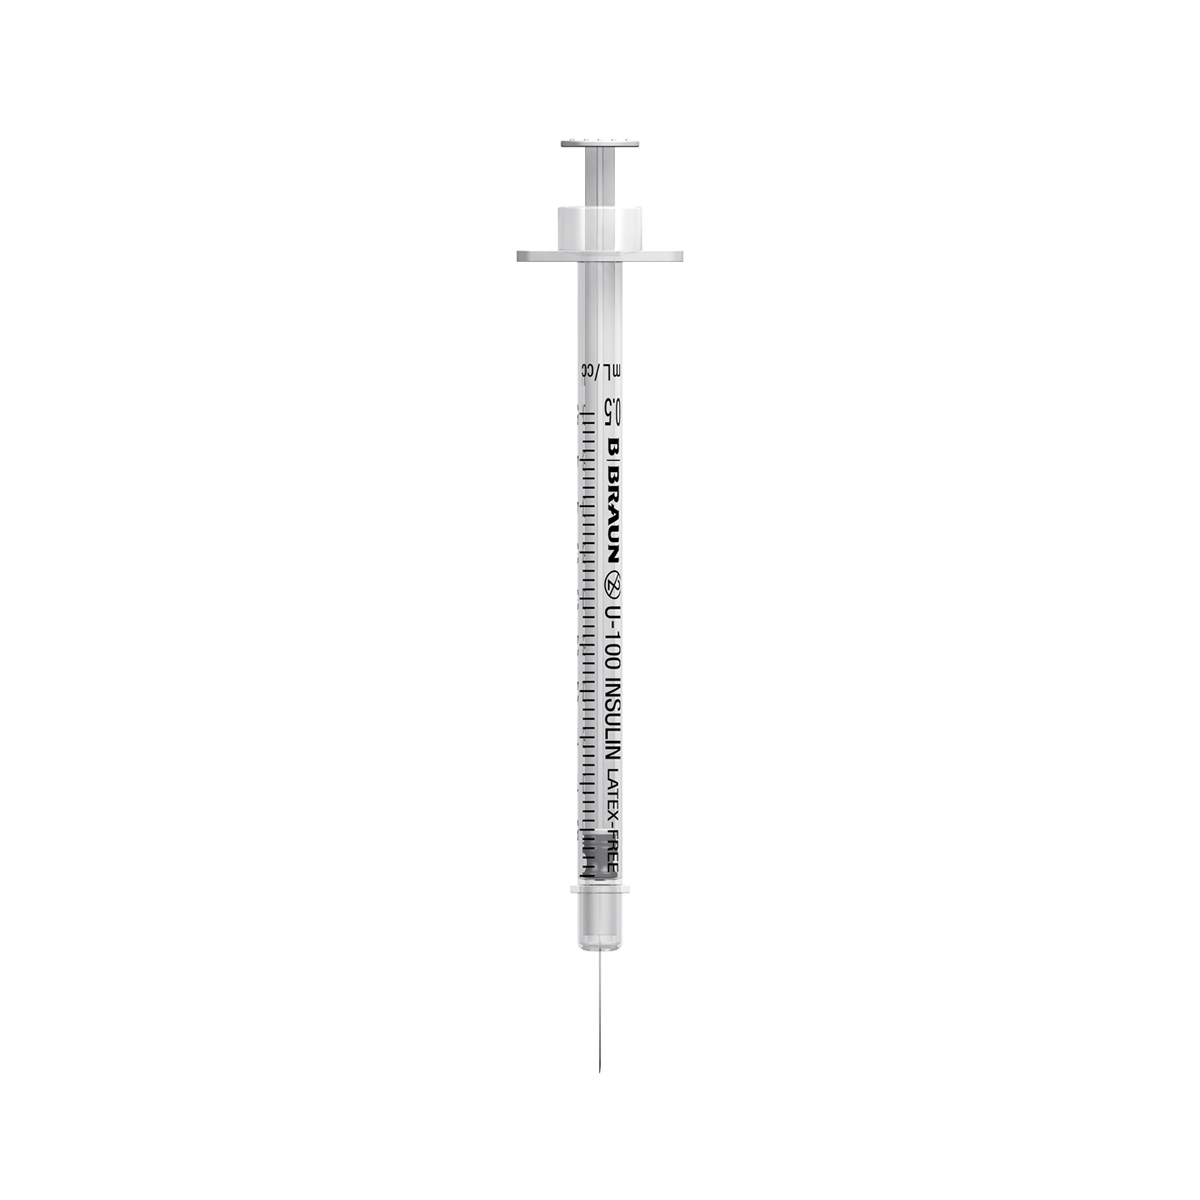 0.5ml 30G 12mm needle BBraun Omnican insulin syringe